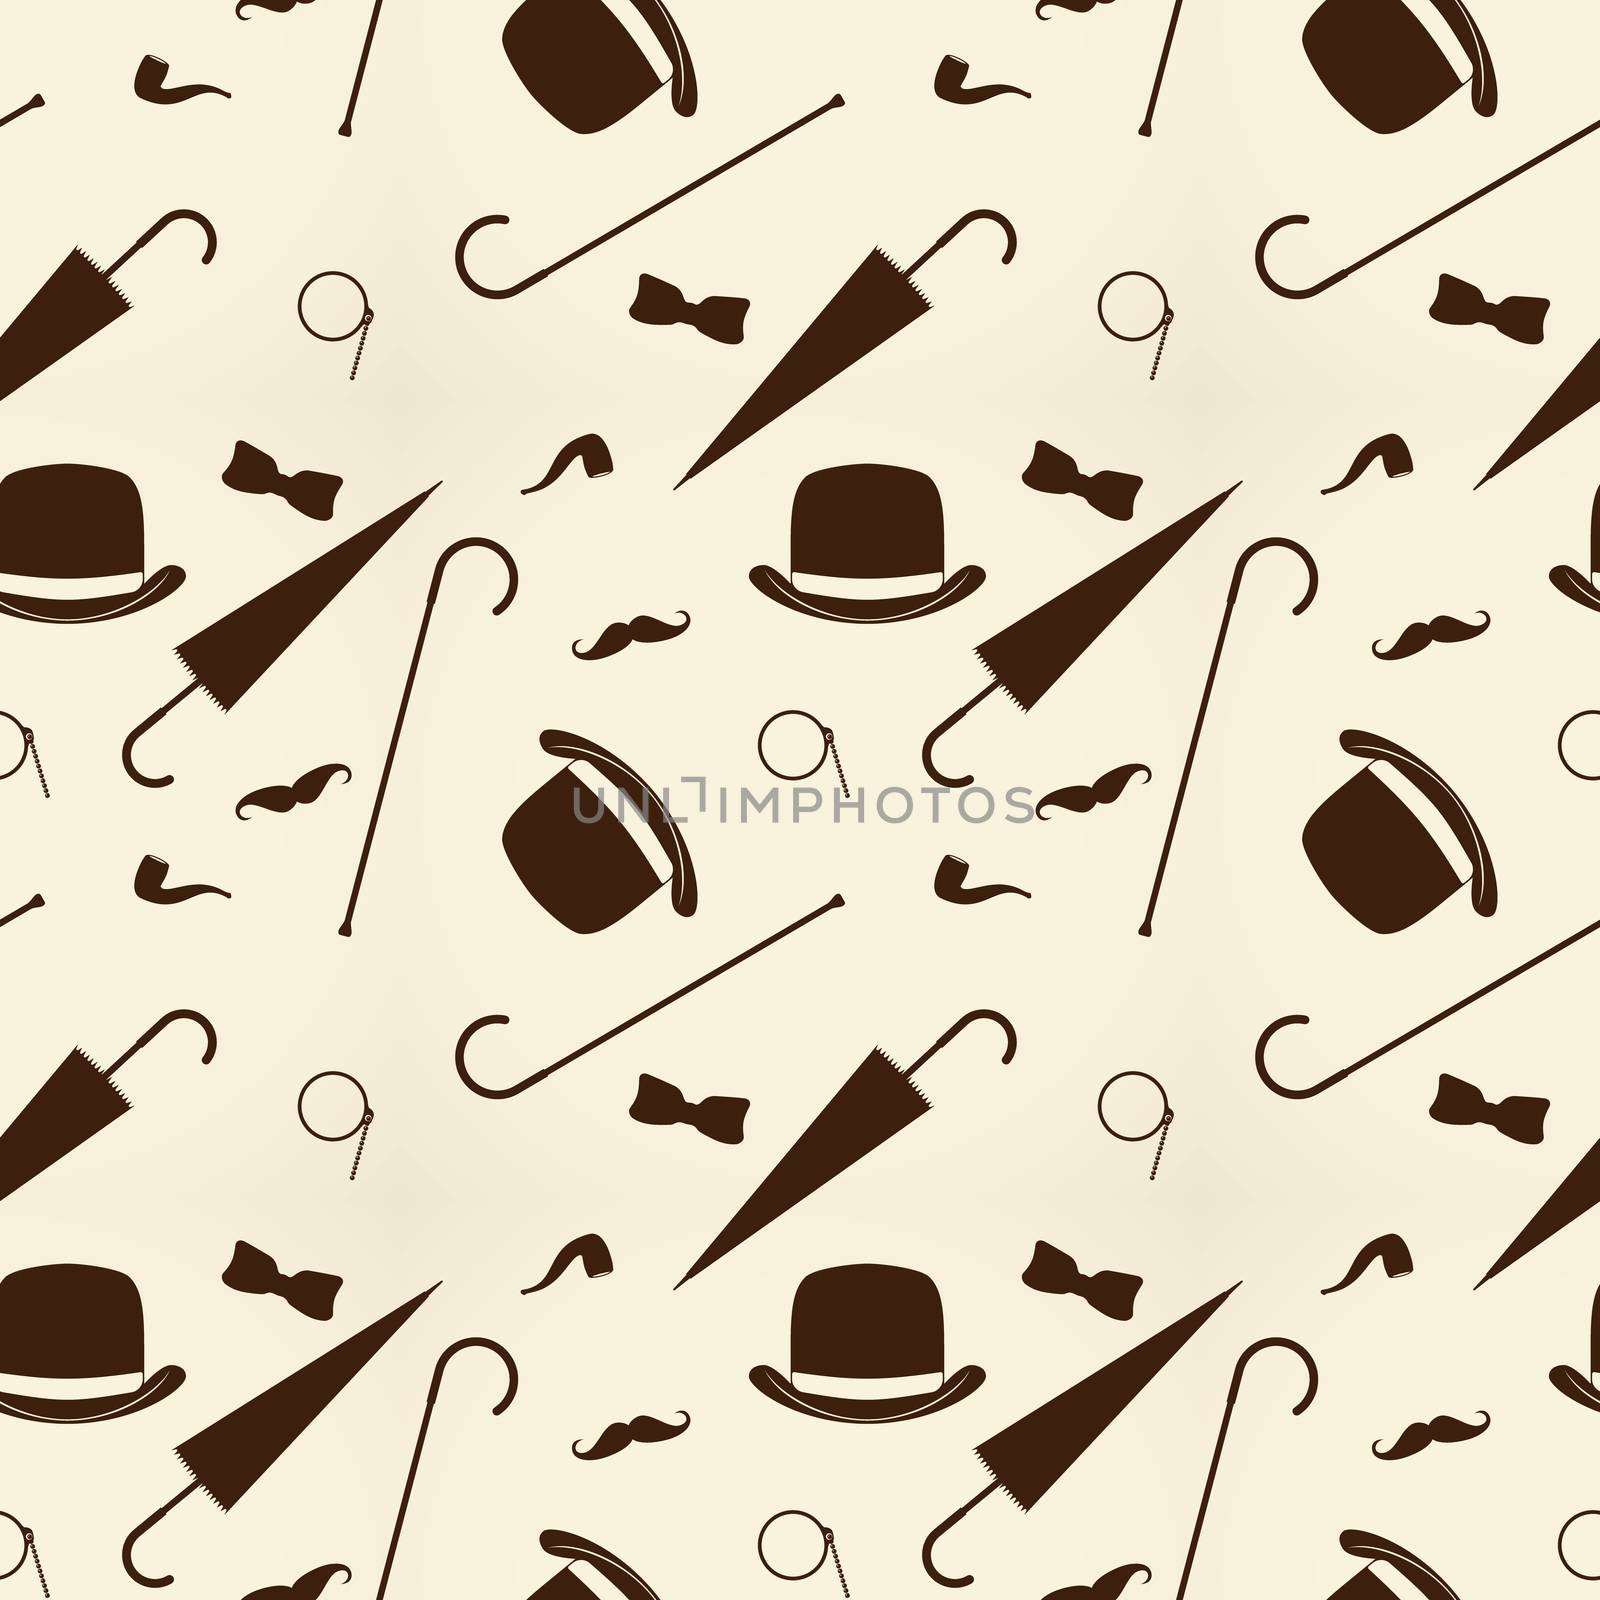 Retro gentleman elements - bowler, moustache, tobacco pipe monocle, cane and umbrella seamless pattern by Lemon_workshop